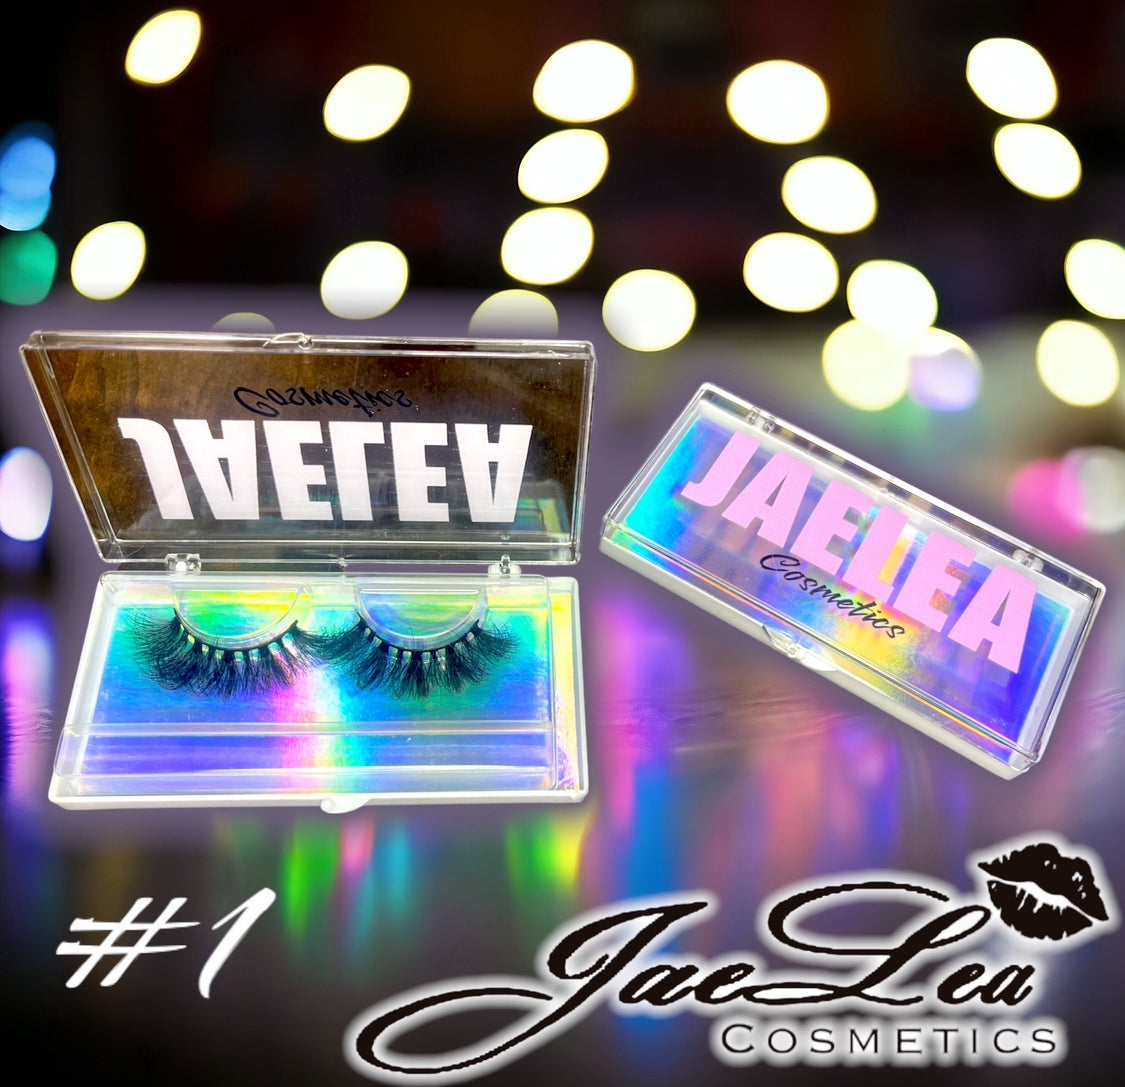 Jaelea Cosmetics lashes